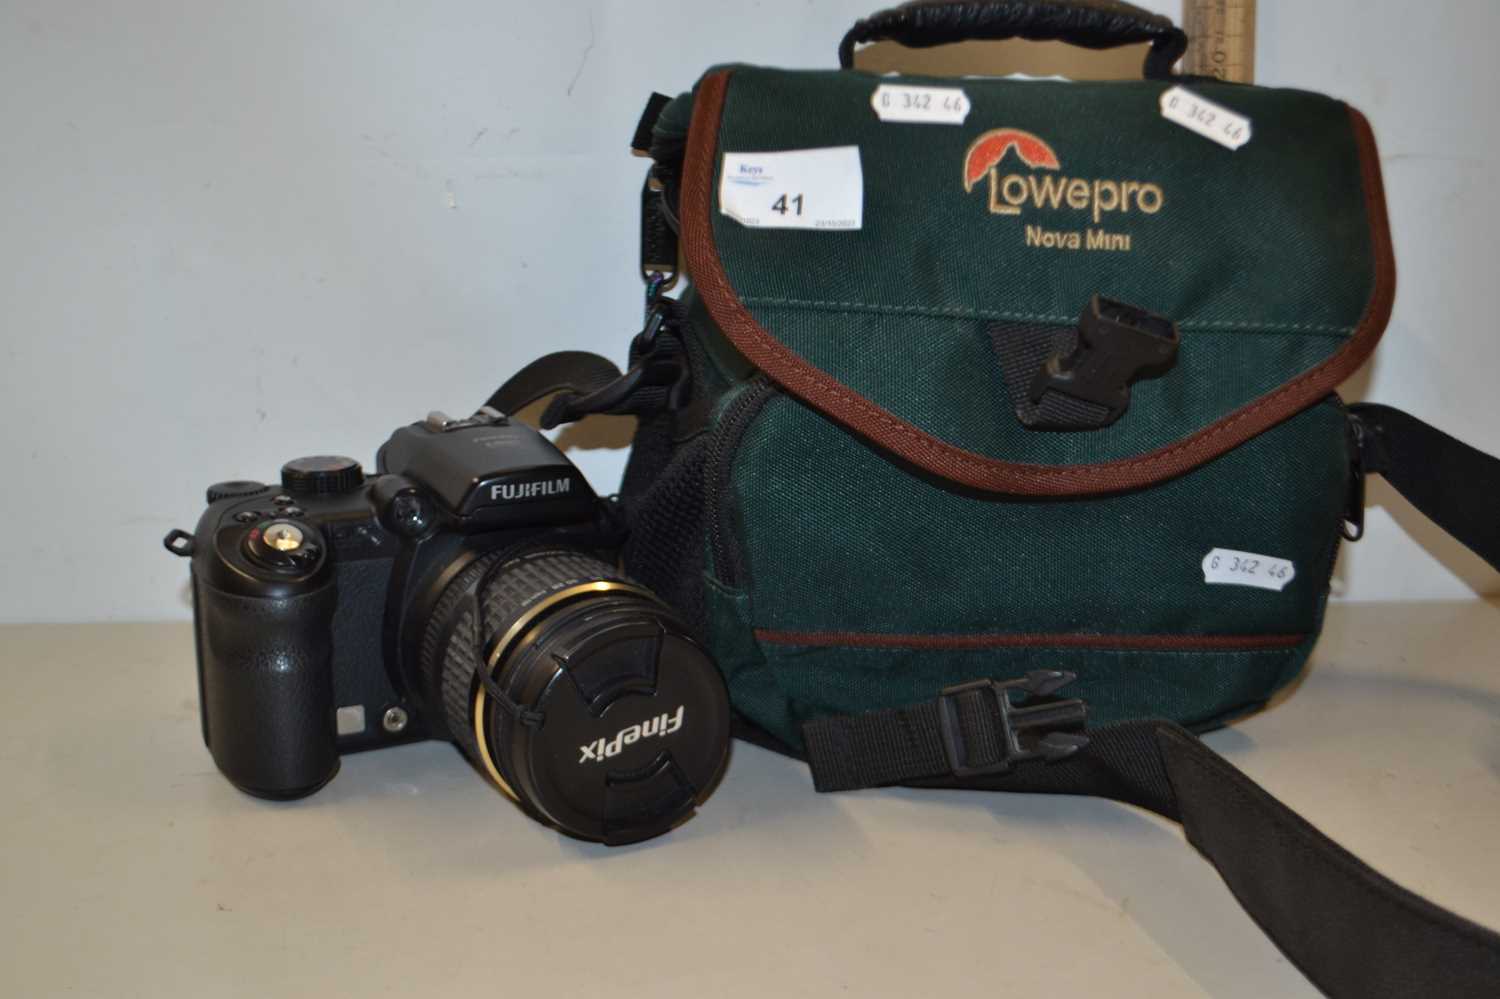 Fuji Film camera with padded bag